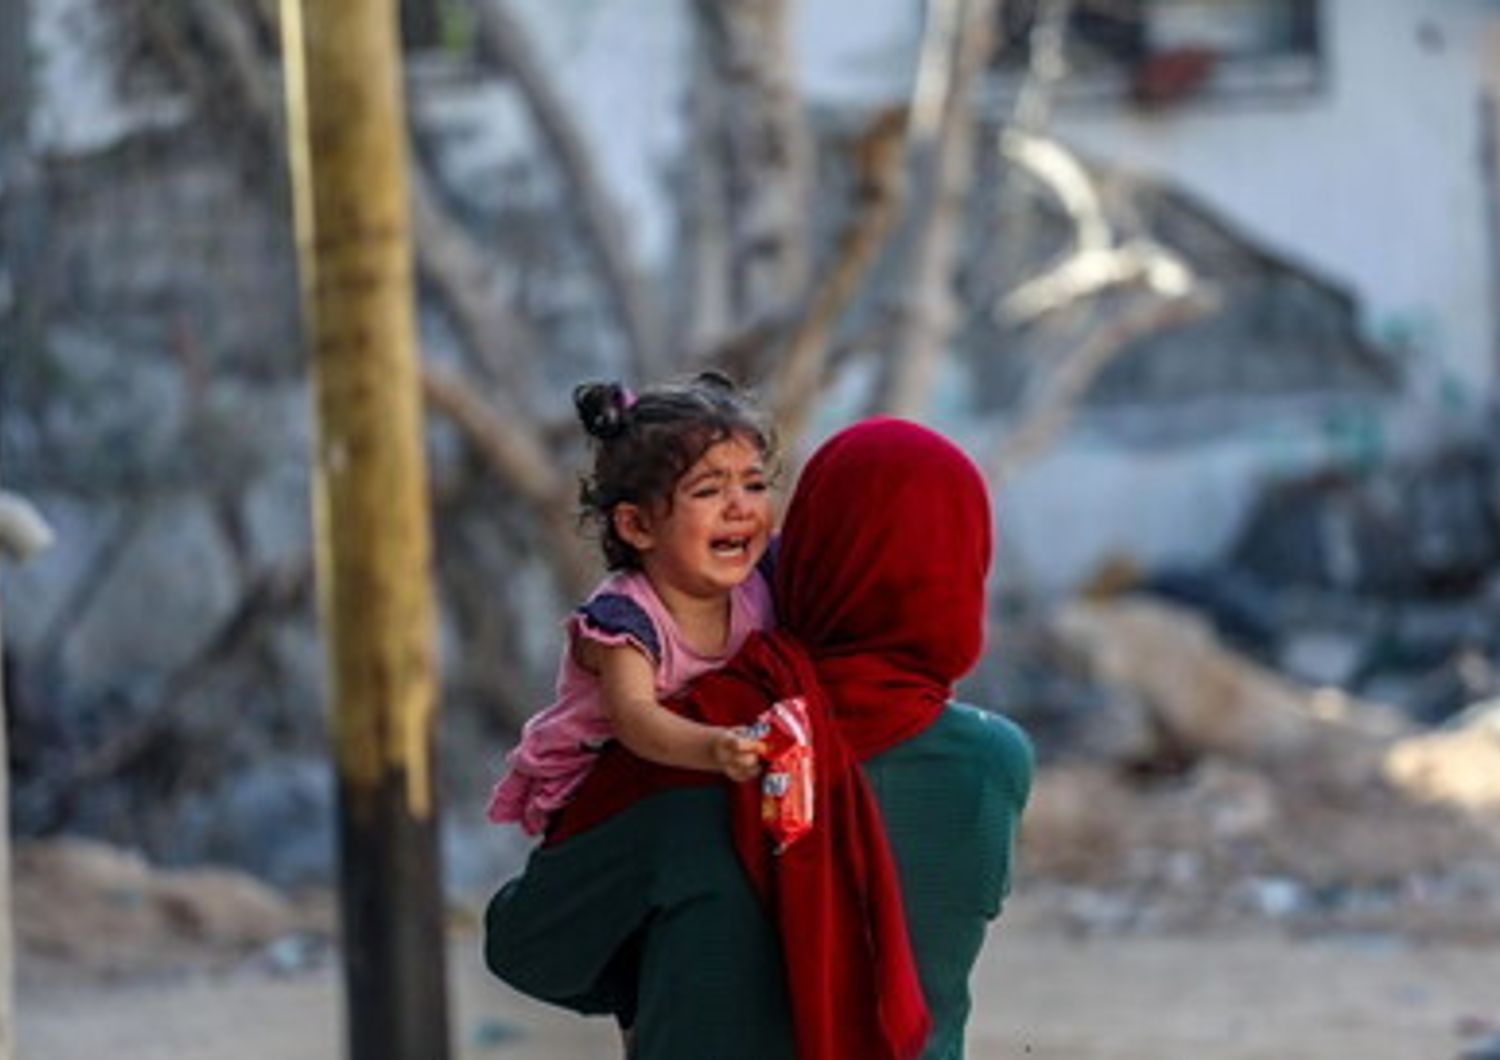 Bambina a Gaza